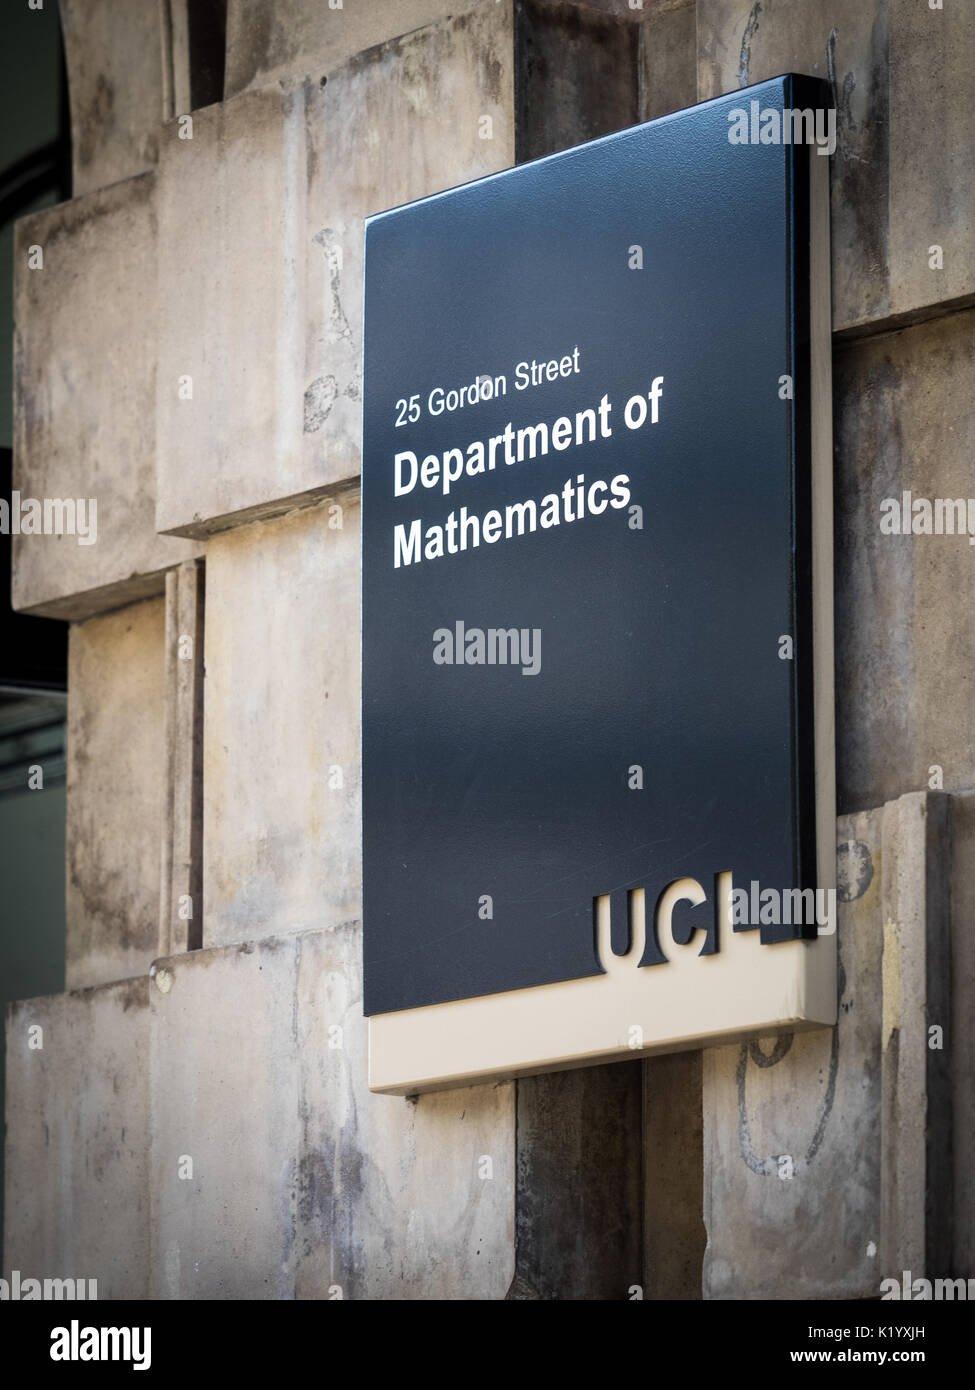 UCL Department of Mathematics sign in London UK - University College London Stock Photo